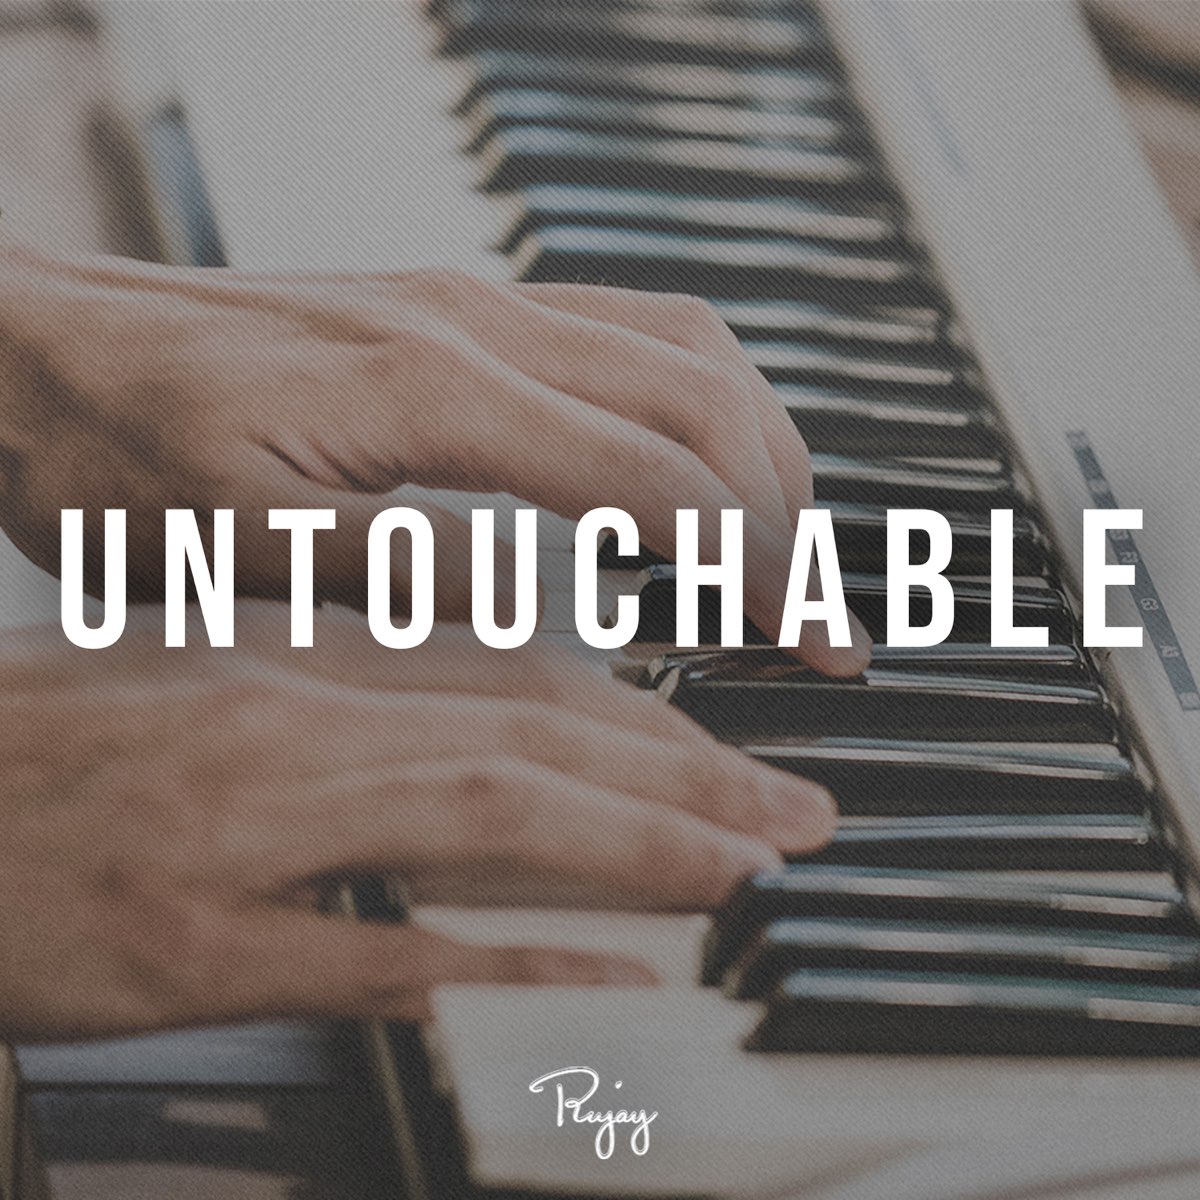 Untouchable (feat. KM Beats) - Single by Rujay on Apple Music